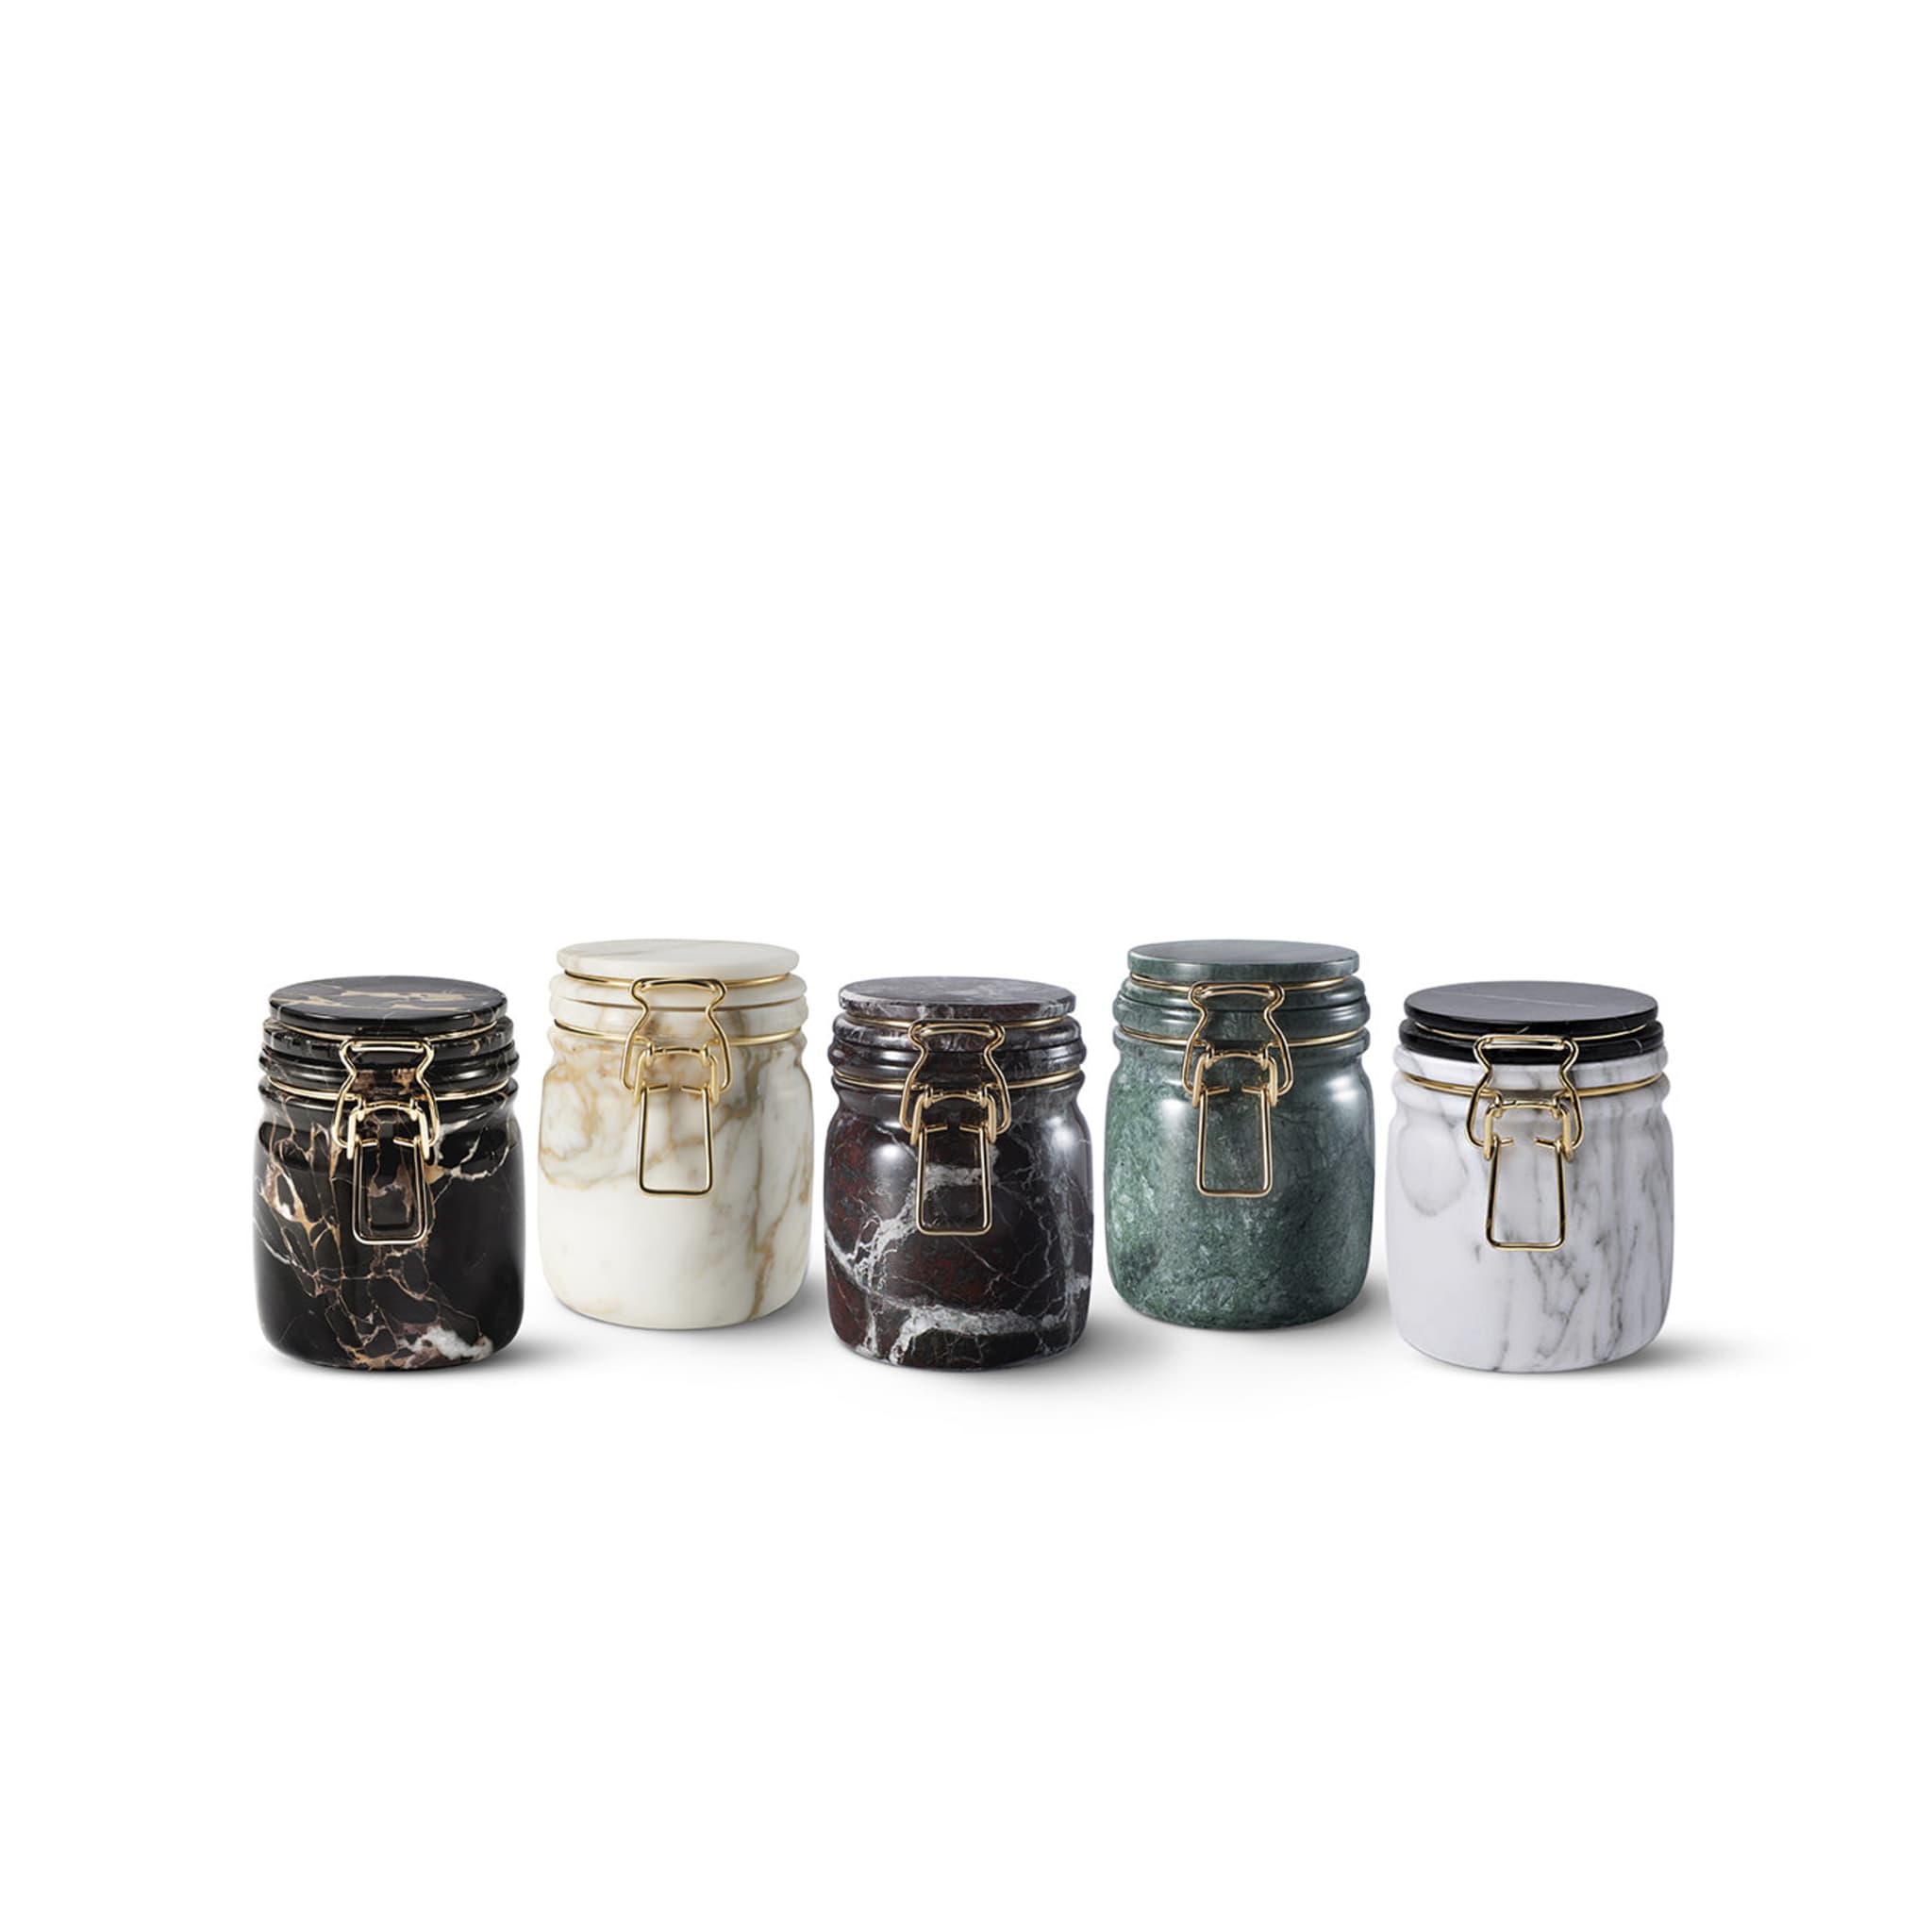 Miss Marble Jar in Portoro Marble by Lorenza Bozzoli - Alternative view 1